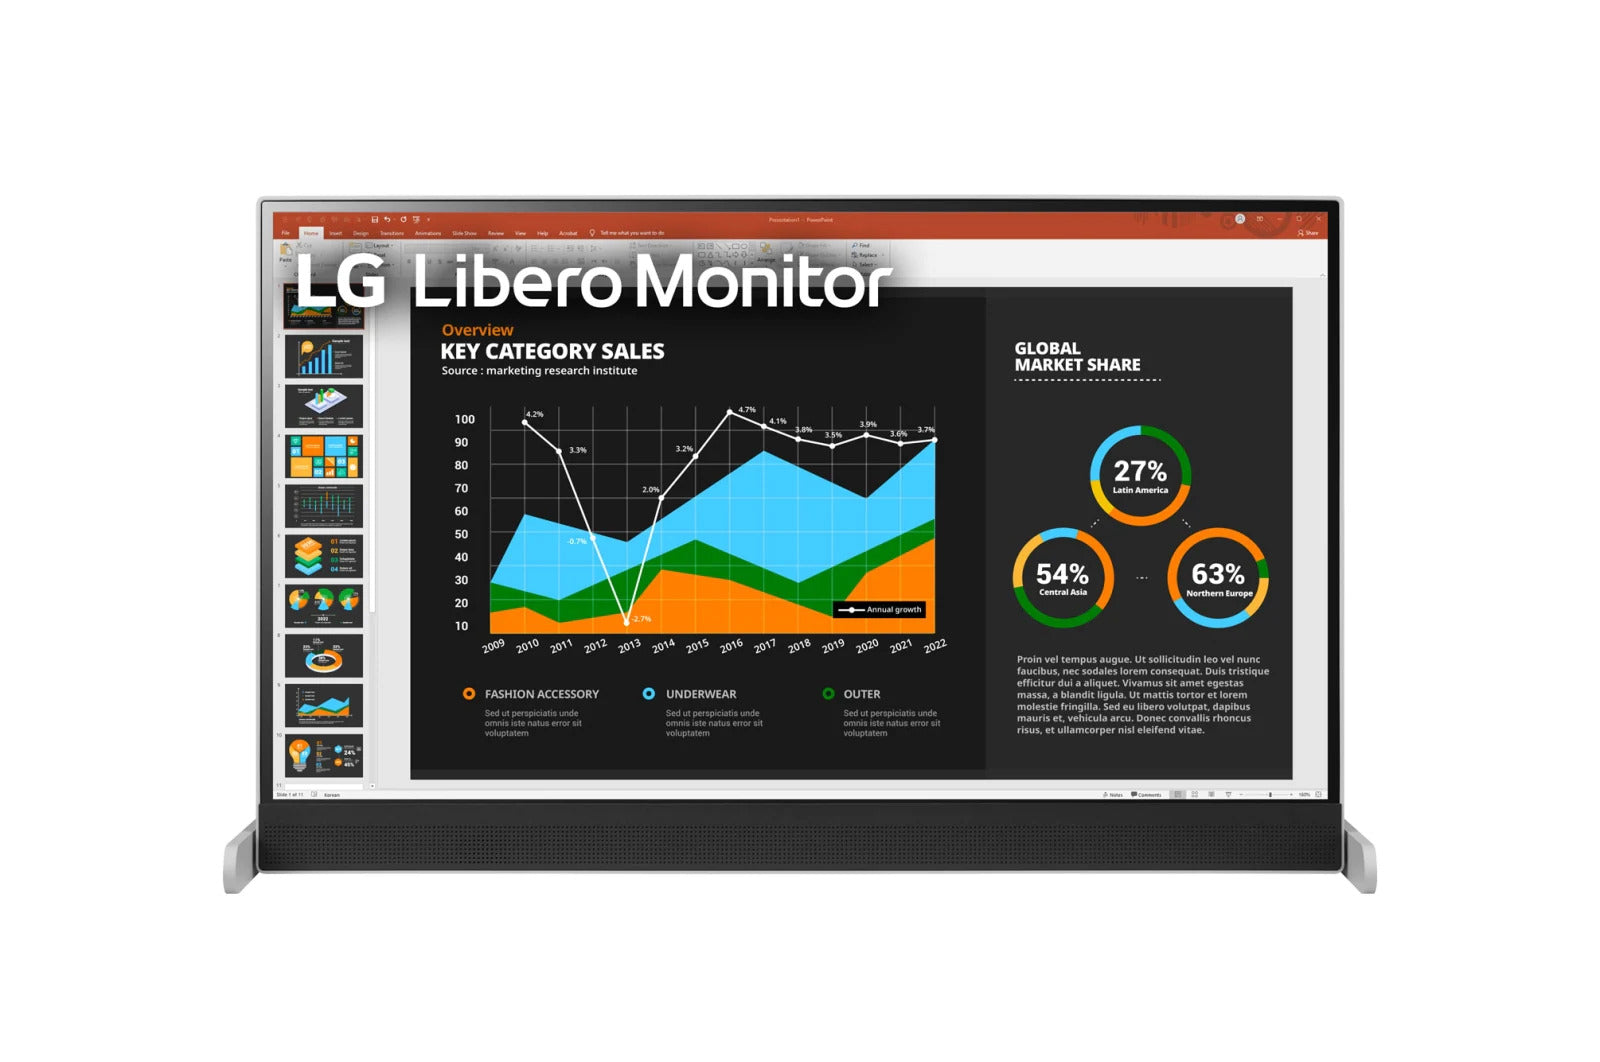 LG 27BQ70QC-S 27-inch QHD (2560 x 1440) IPS Libero Monitor with Detachable Full HD Webcam